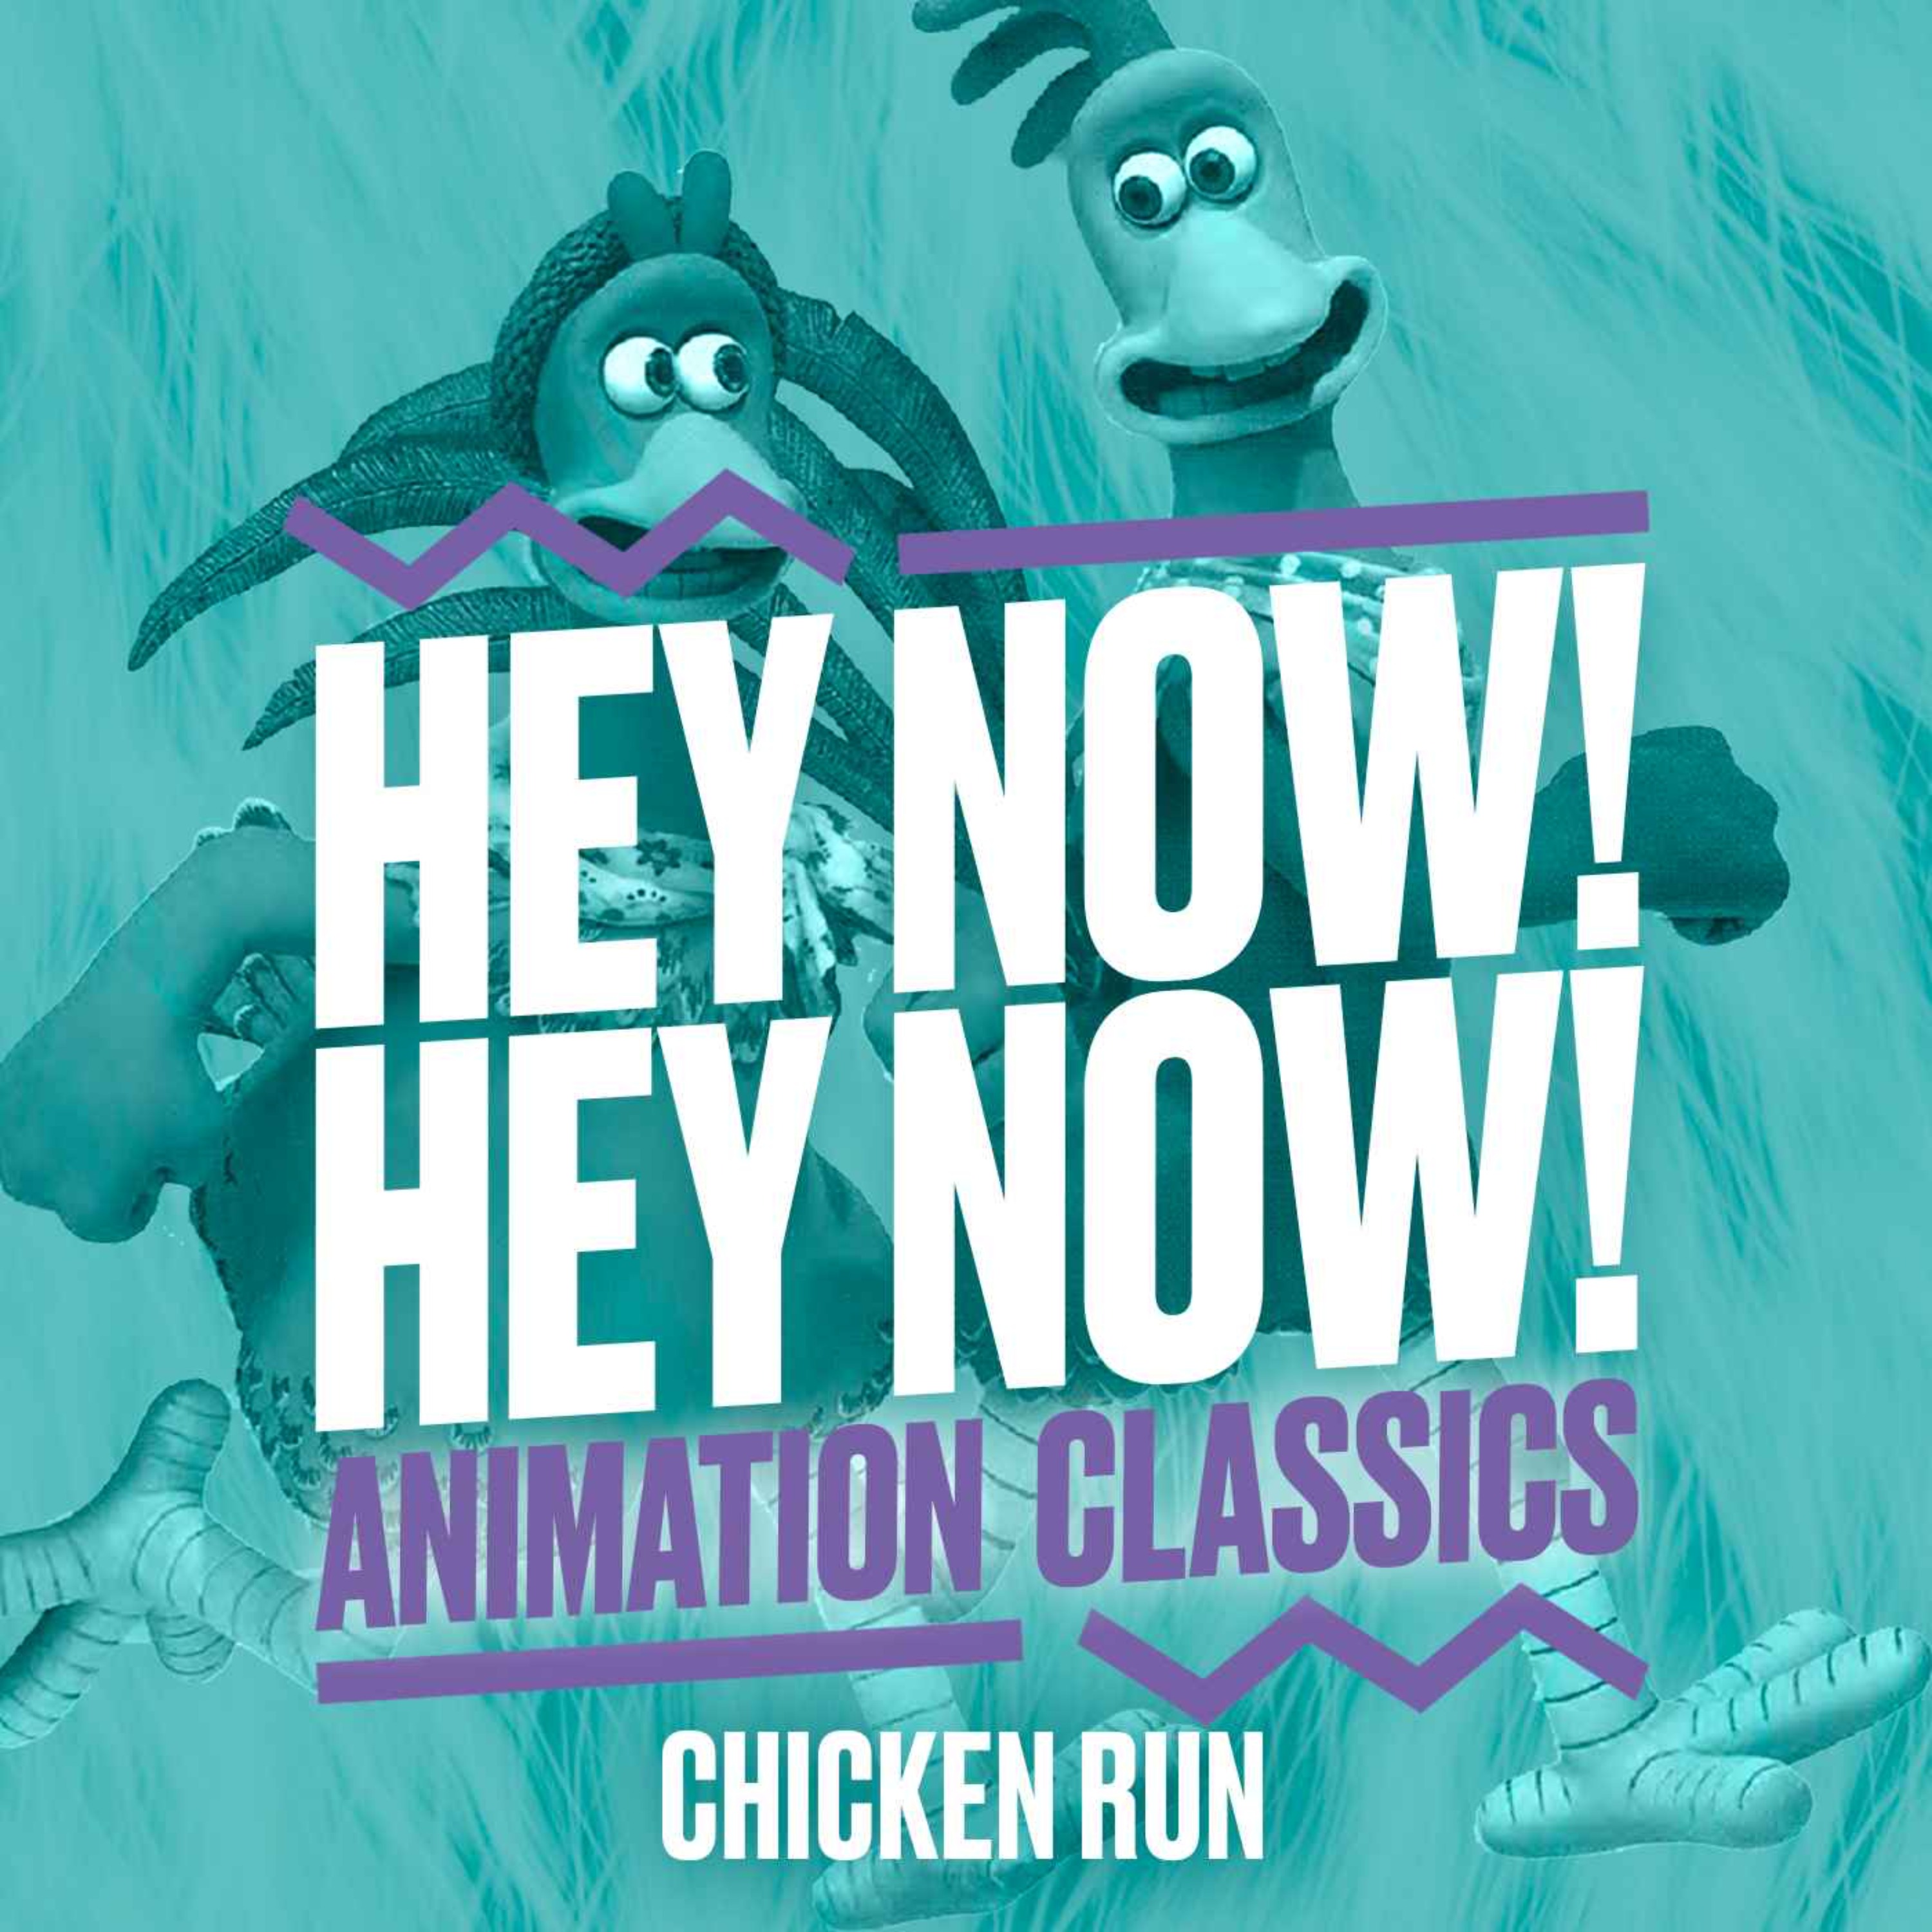 Animation Classics: Chicken Run